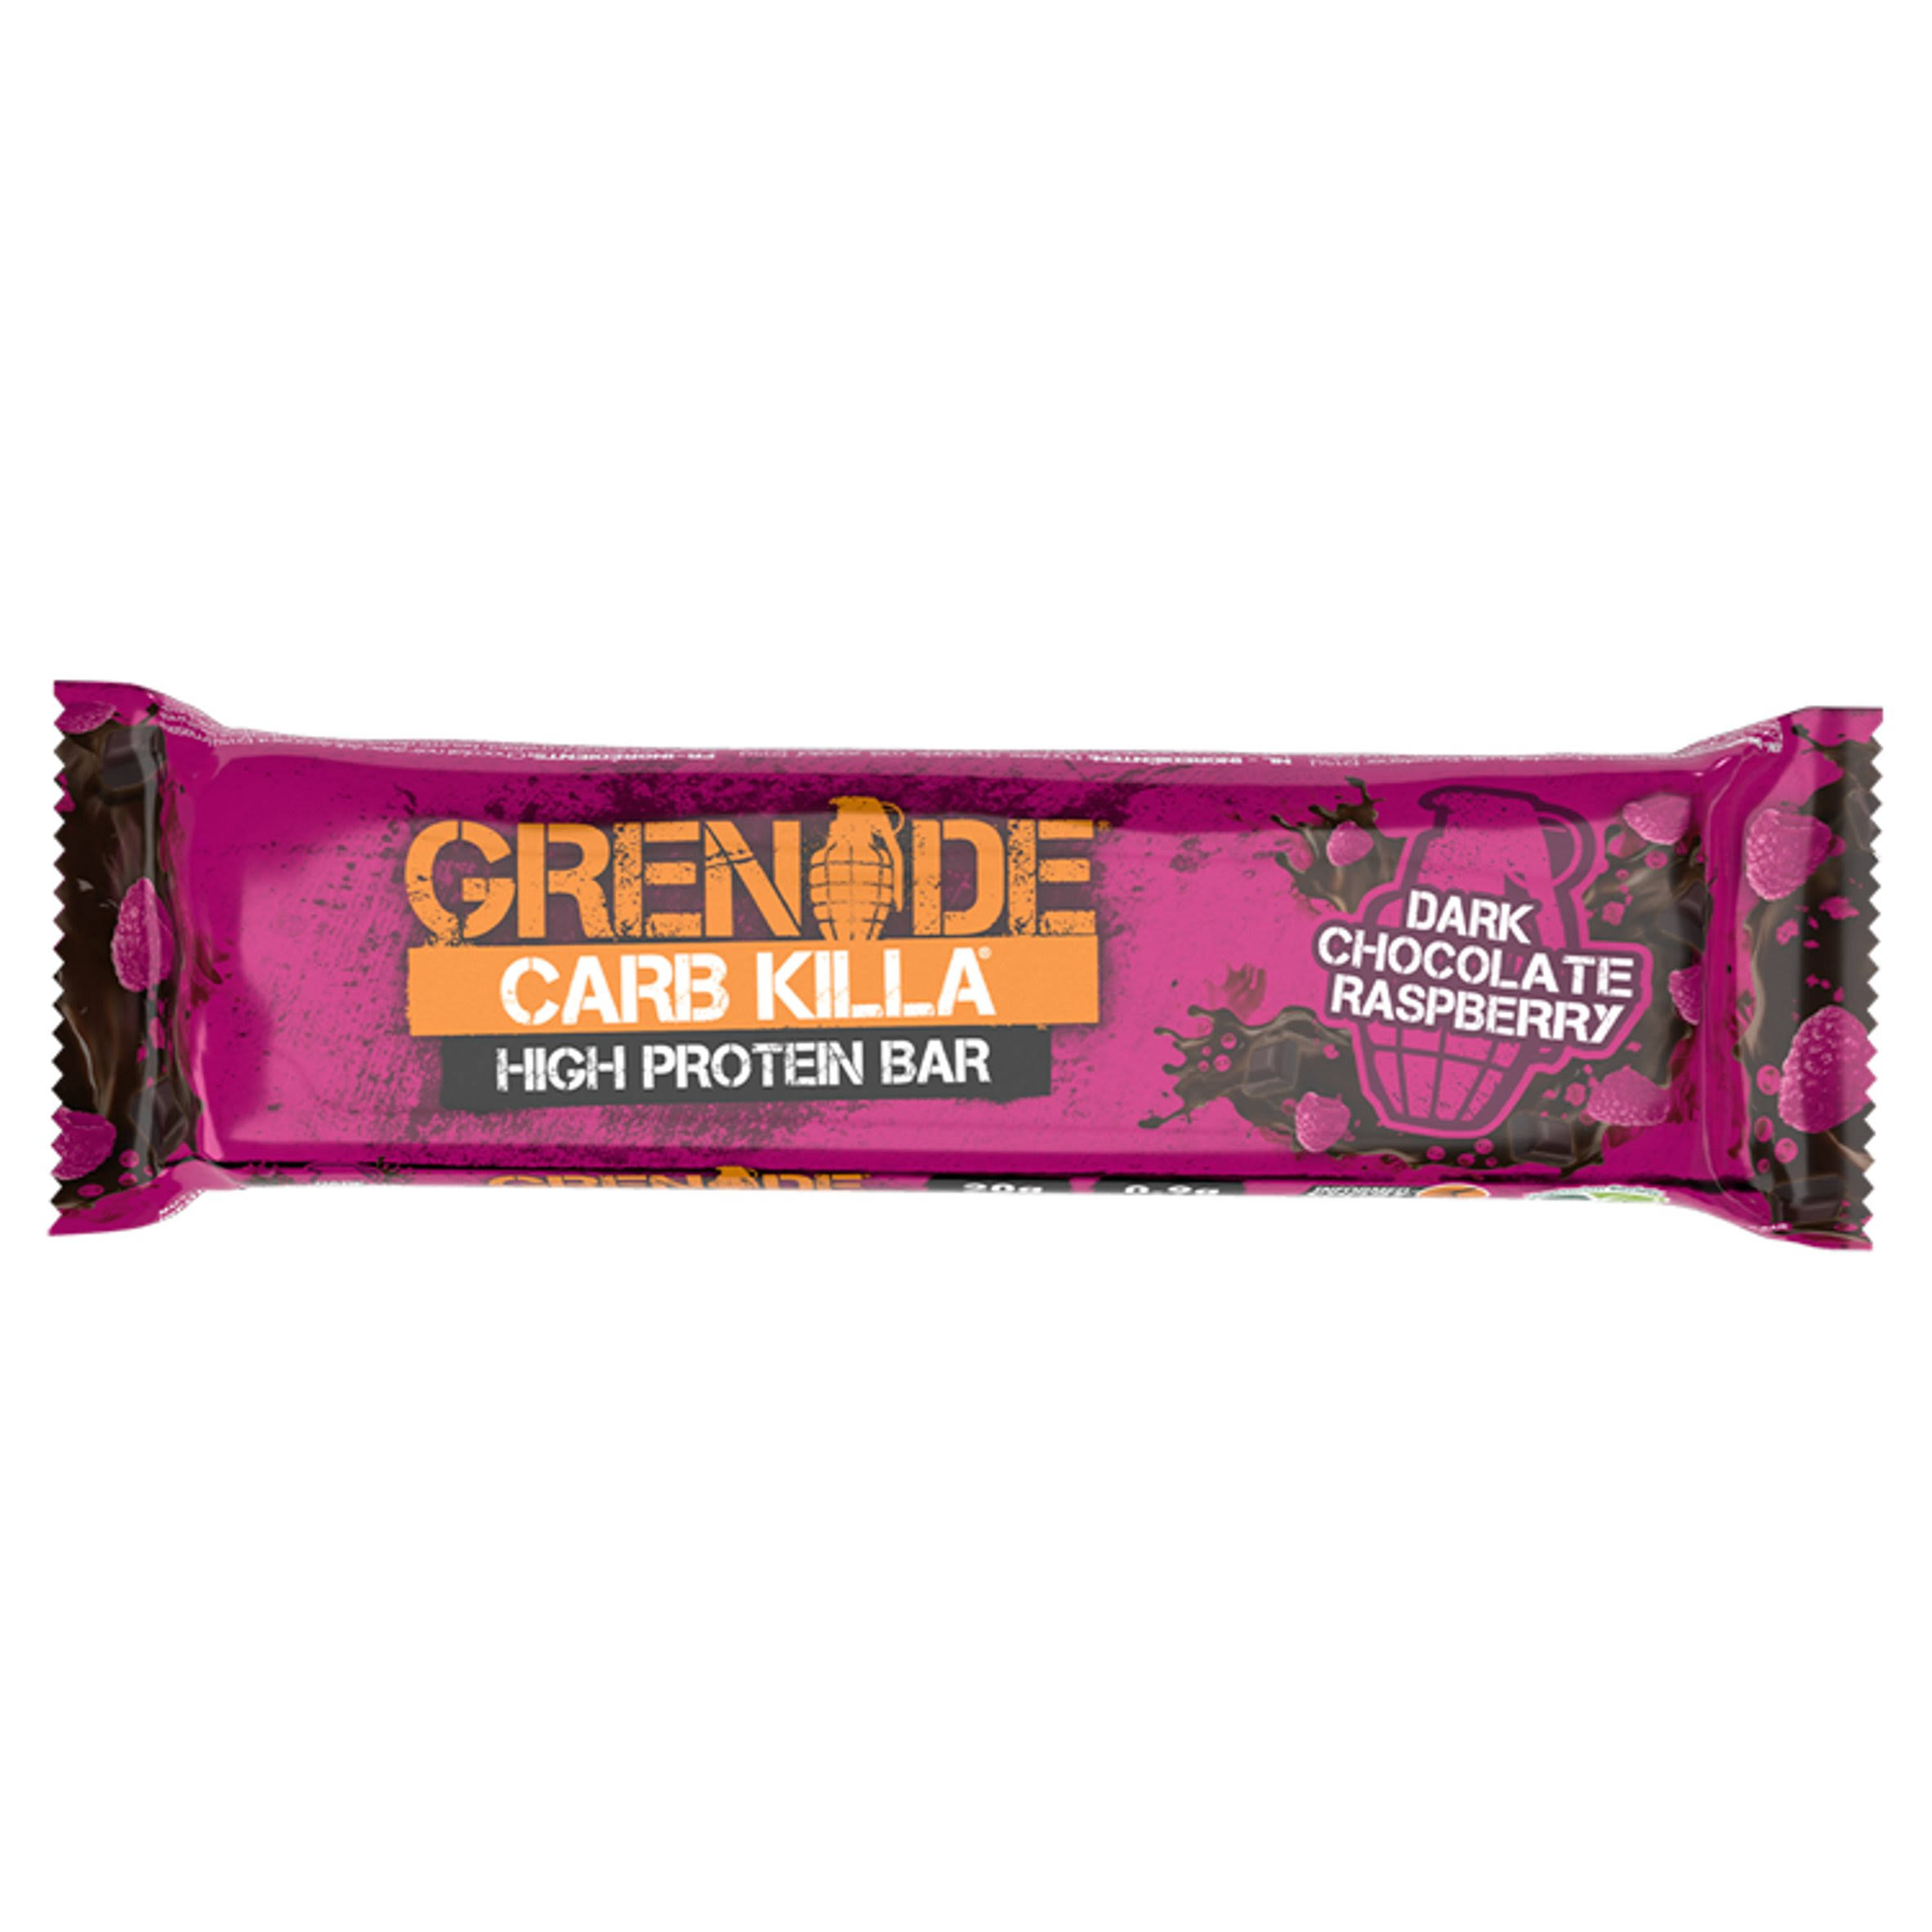 Grenade Carb Killa High Protein Bar - Dark Chocolate Raspberry, 60g